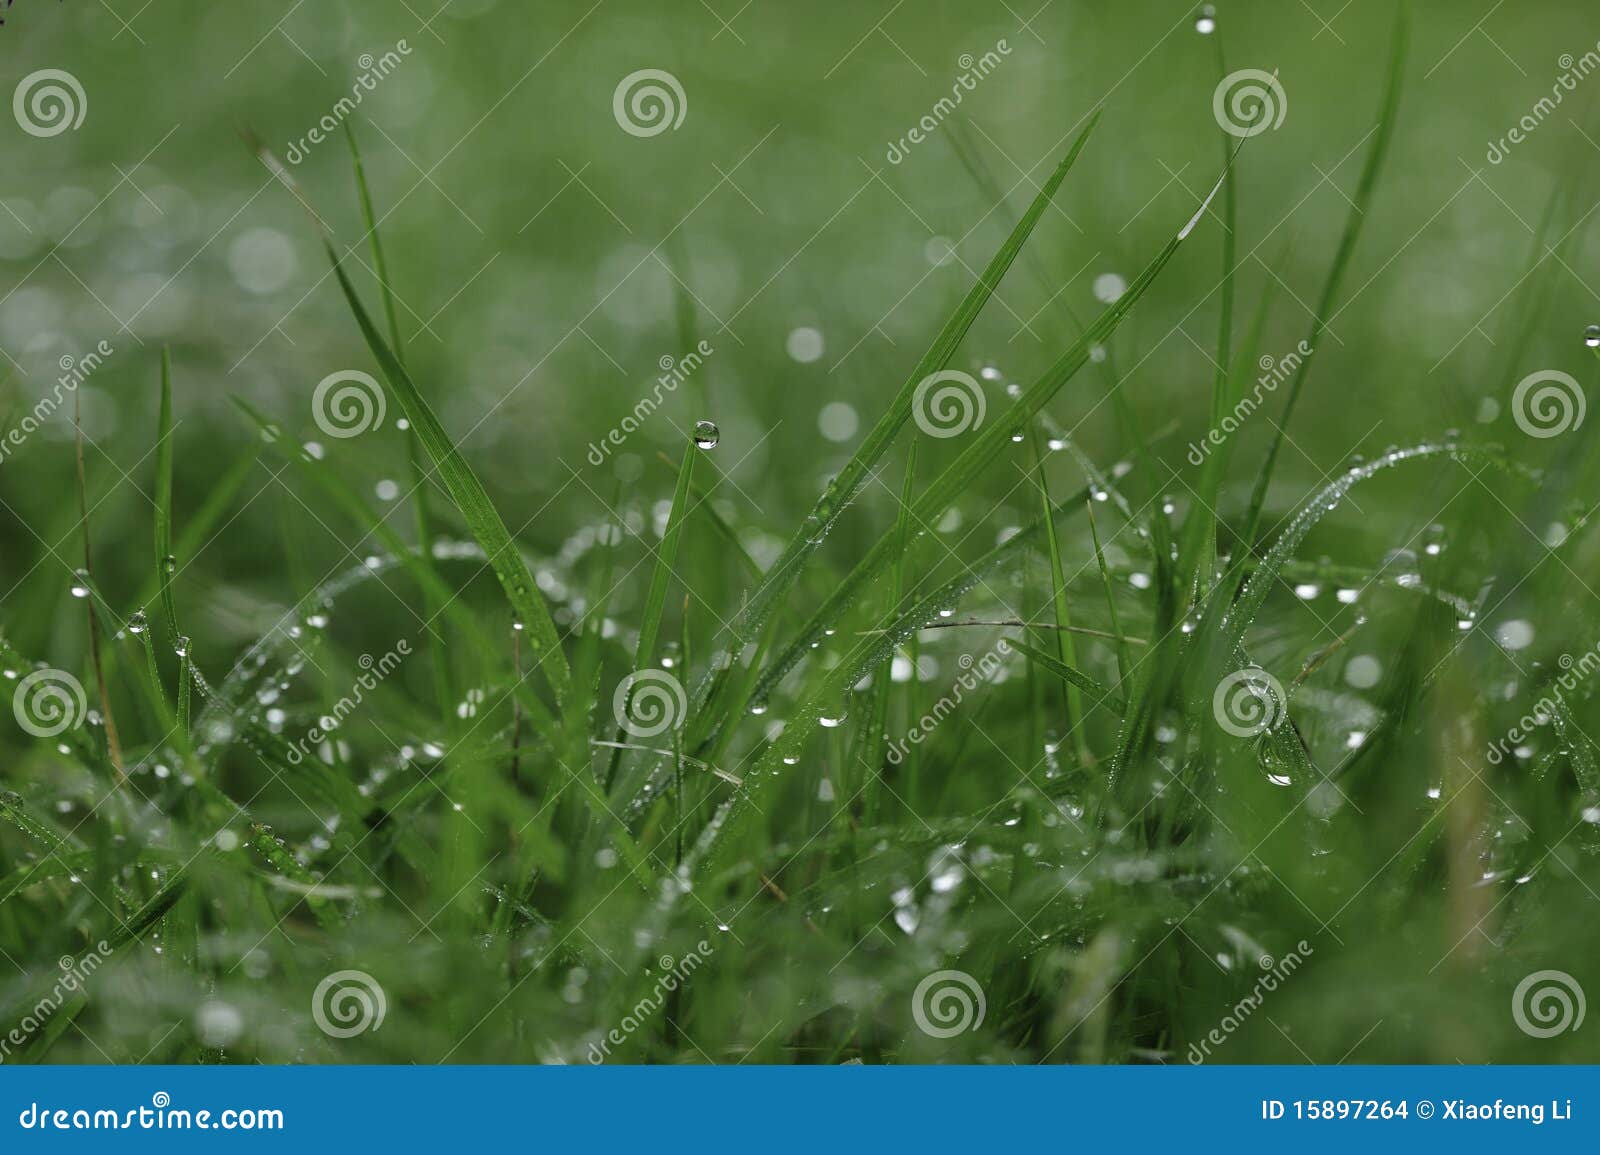 macro raindrops on grass